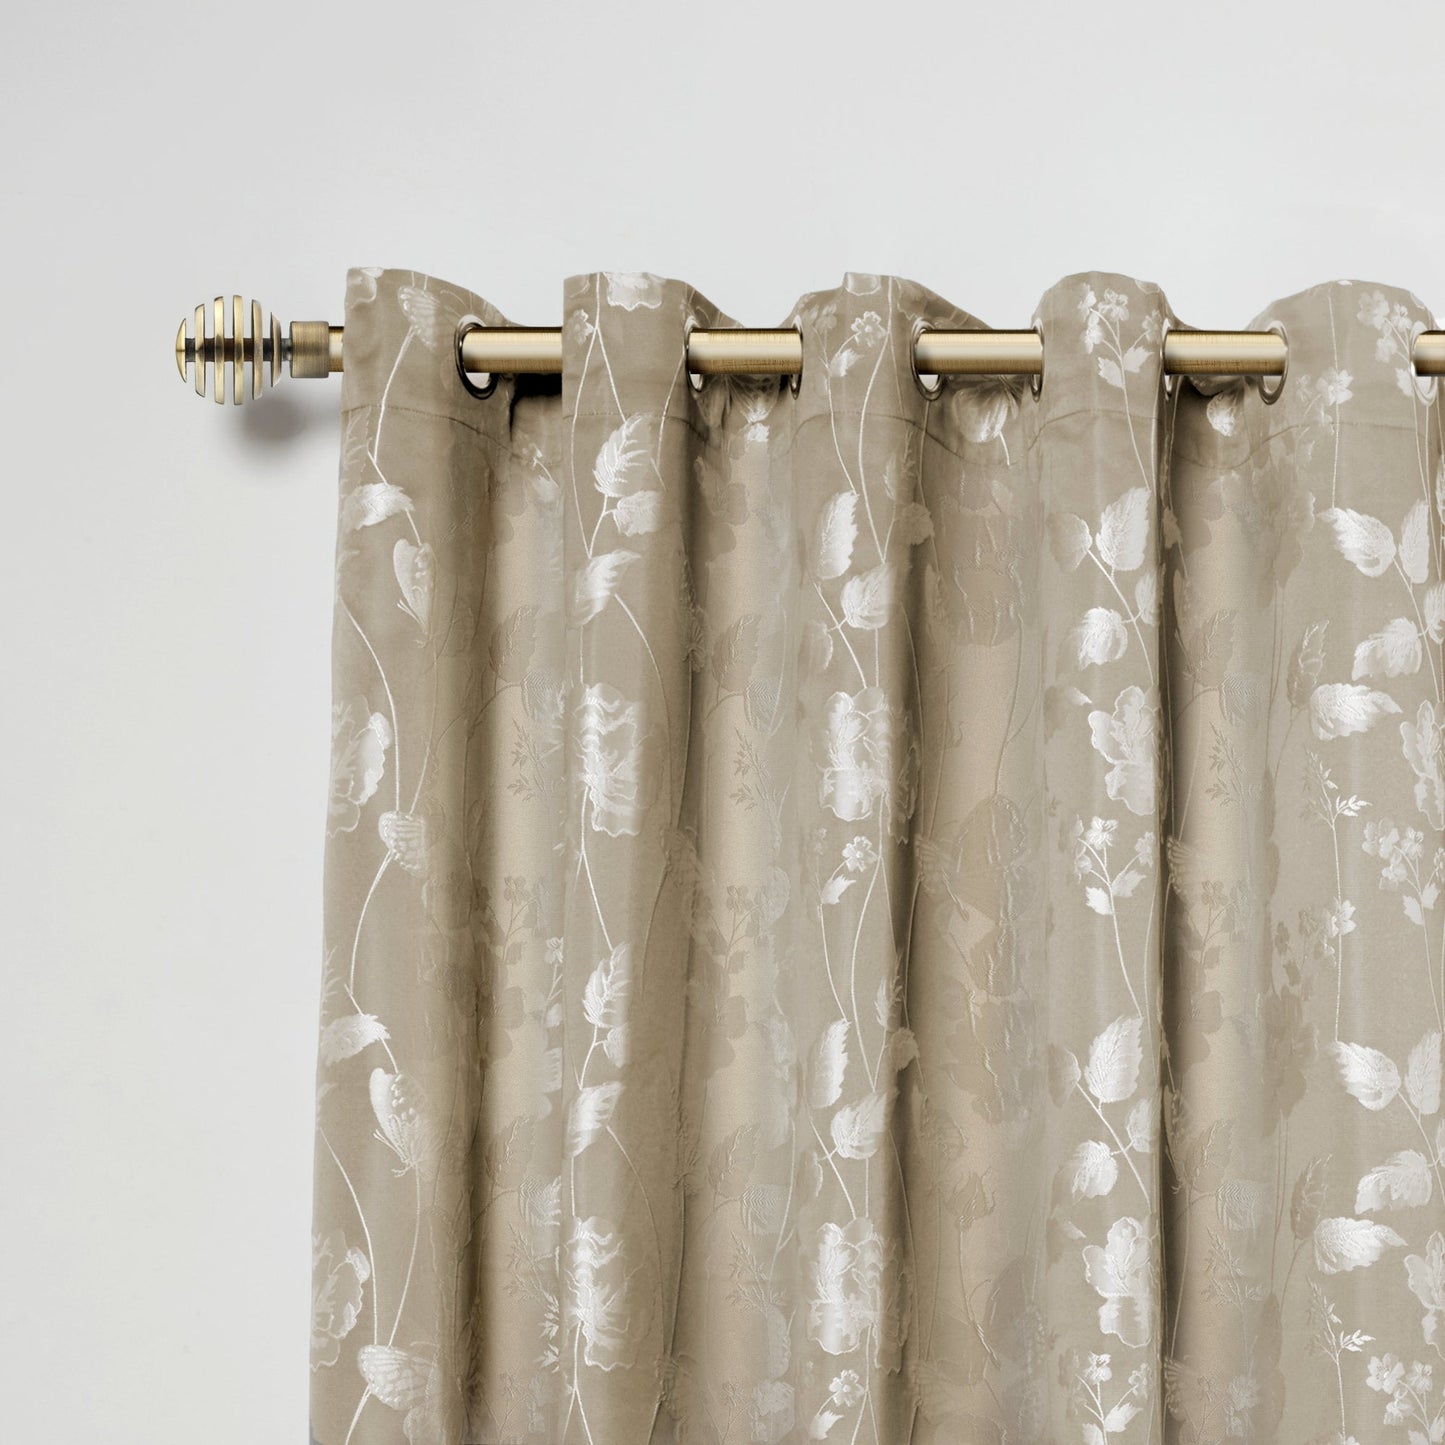 Antique Brass Metal Sliced Extendable Curtain Pole